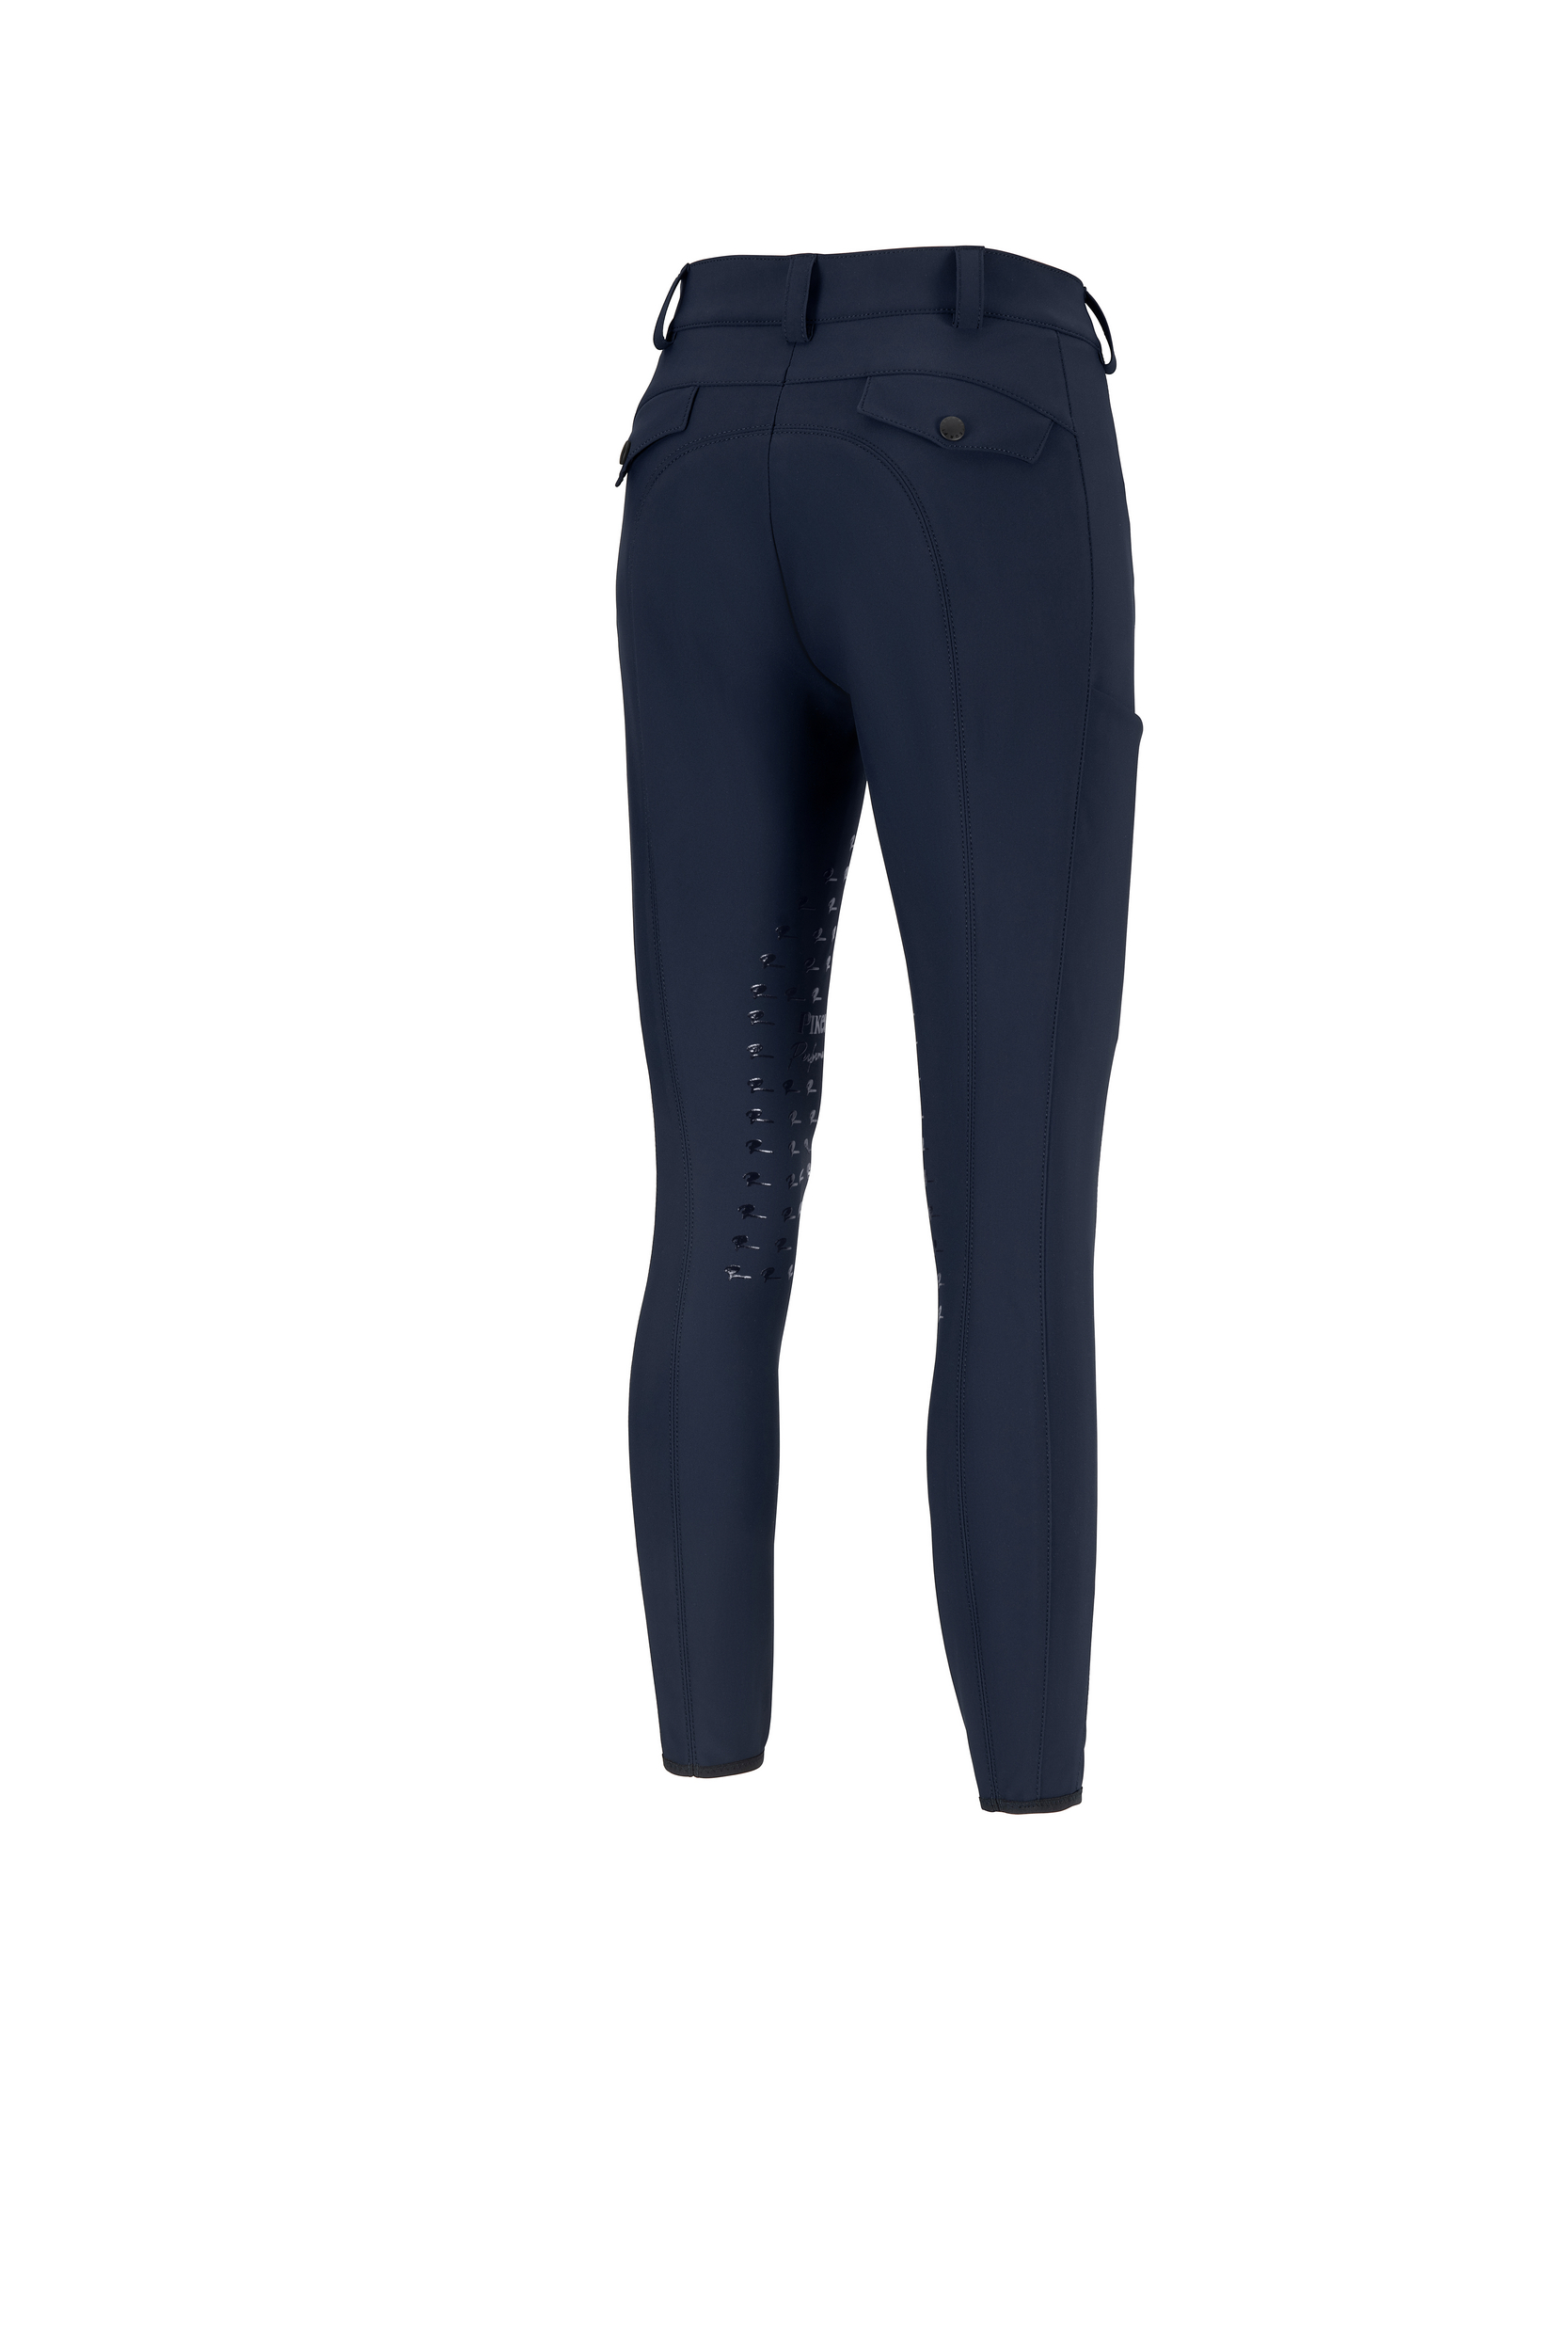 Pantaloni da equitazione ROMY, Grip, donna, toppe al ginocchio, H/W 22, blu notte